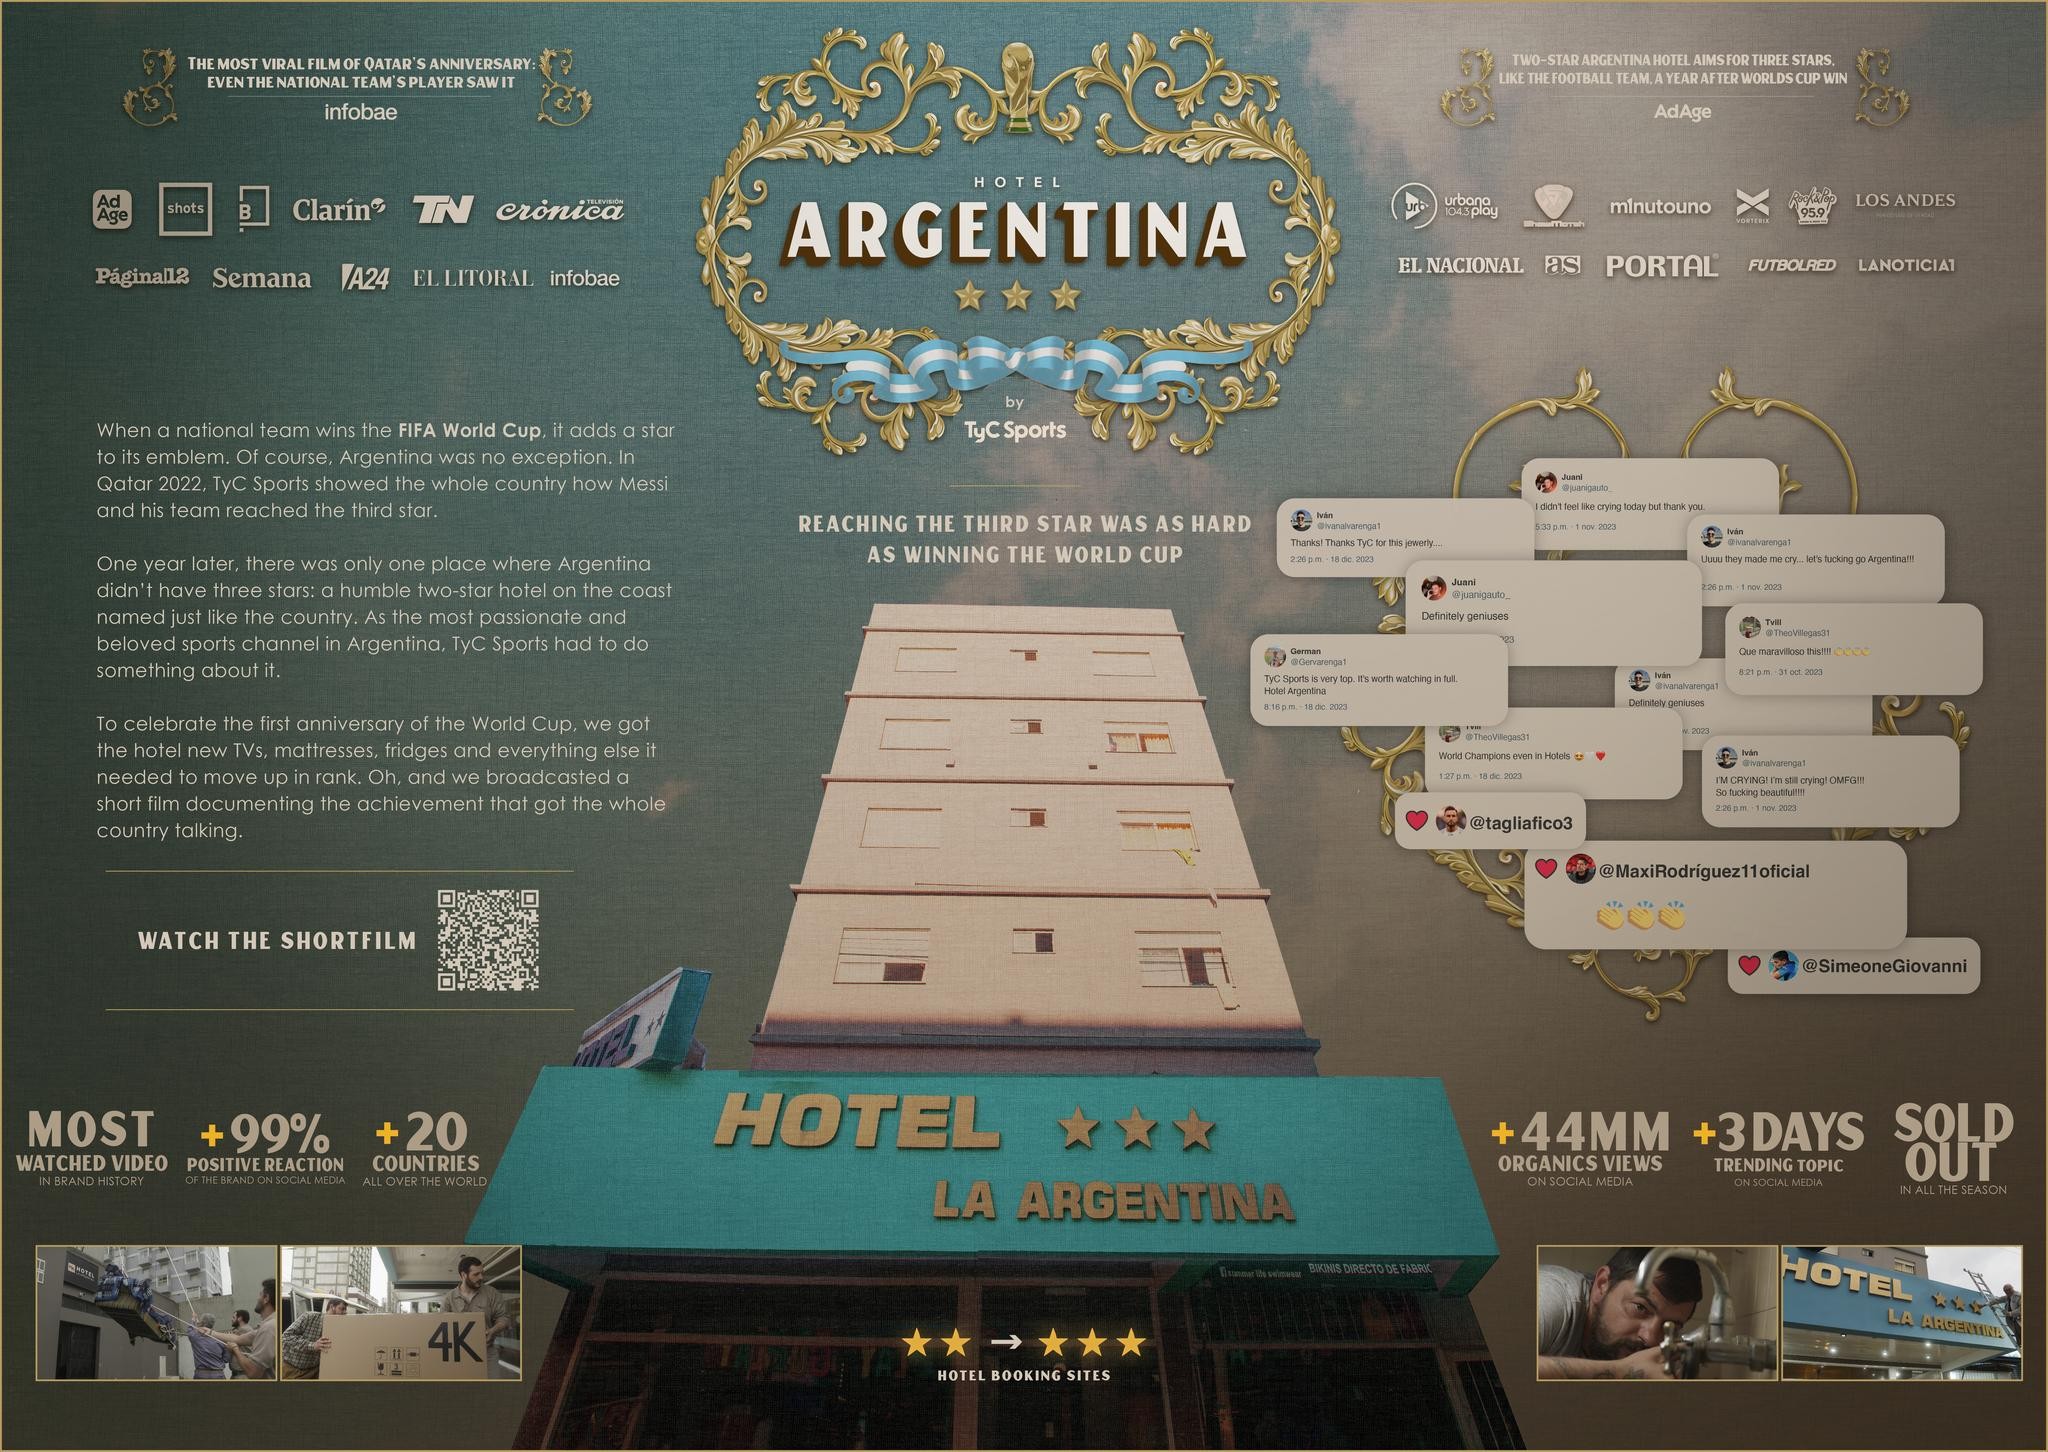 LA ARGENTINA HOTEL